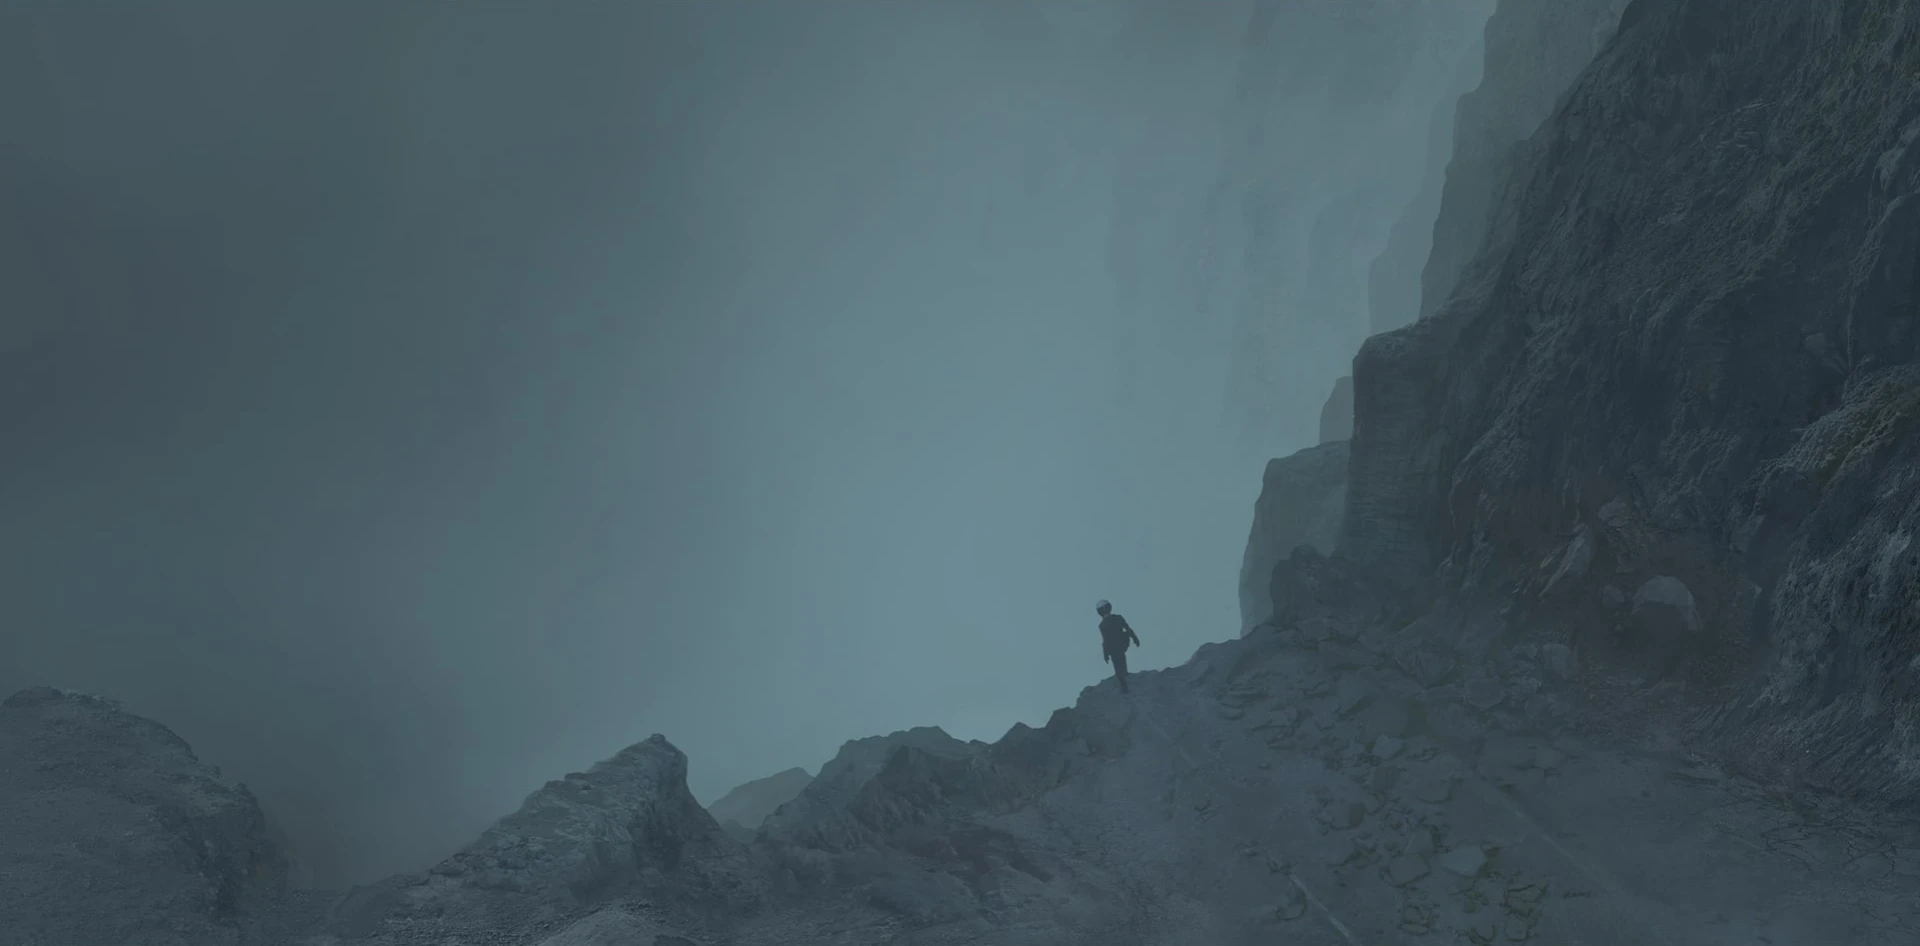 A person above a mountain precipice, a concept art from Raynault vfx